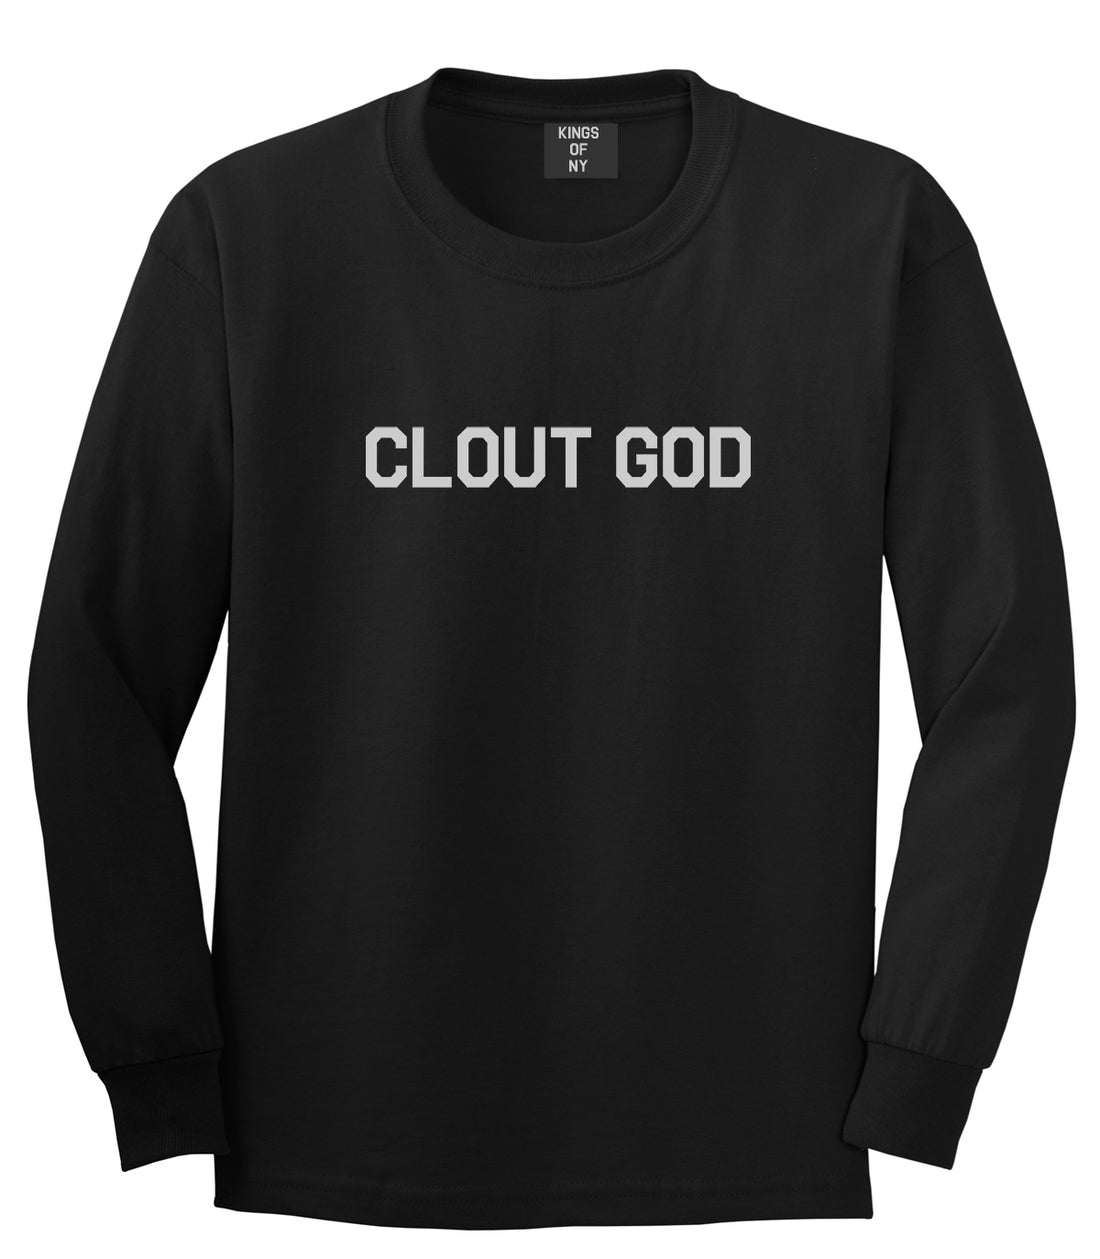 Clout God Mens Long Sleeve T-Shirt Black by Kings Of NY